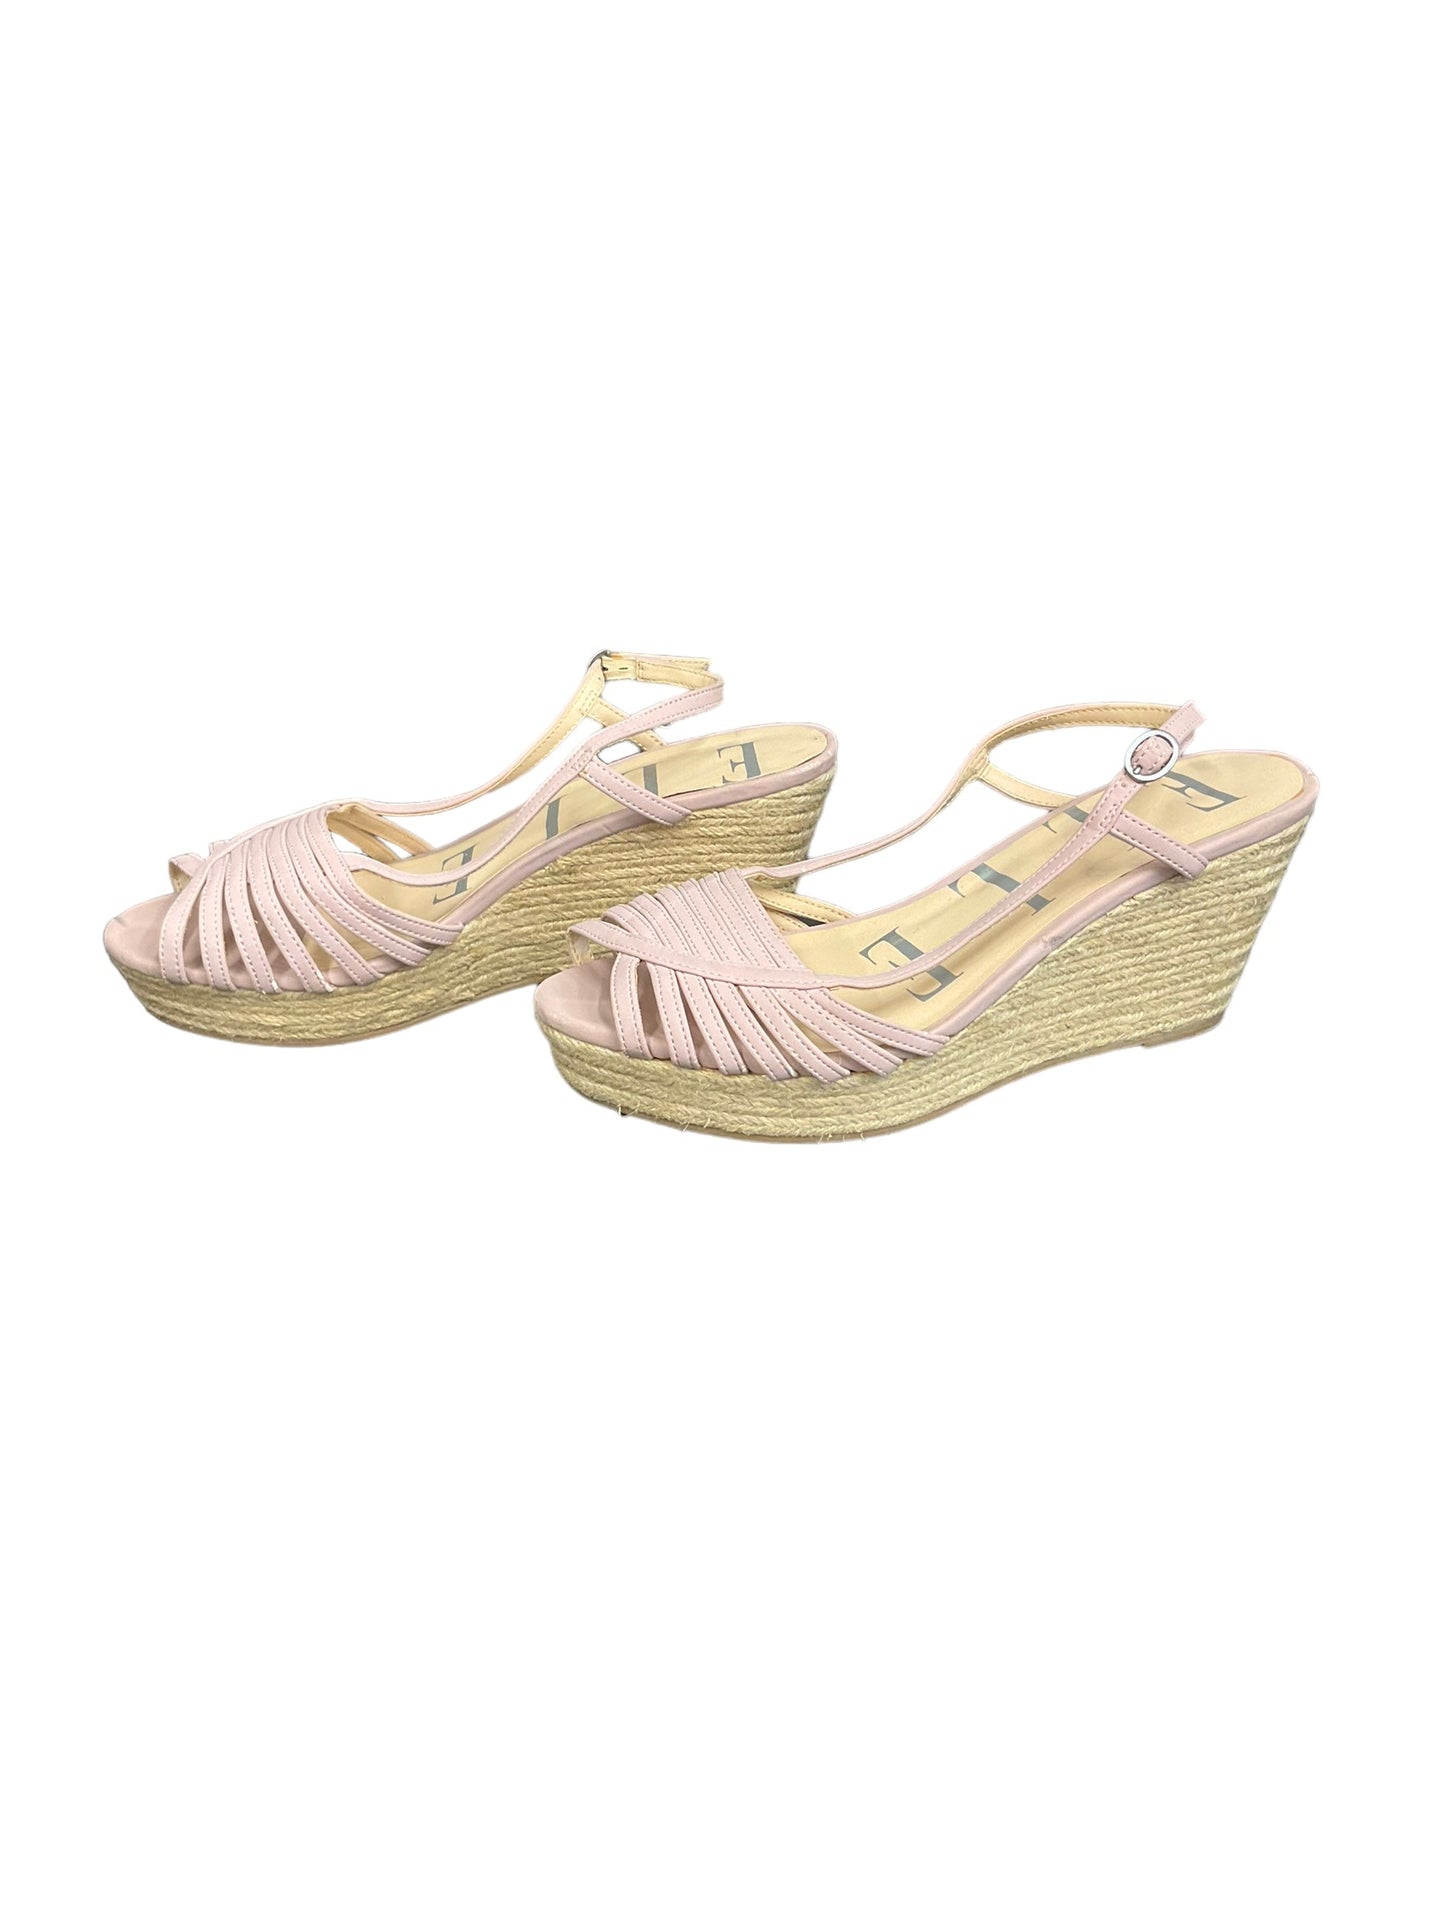 Sandals Heels Wedge By Elle  Size: 10